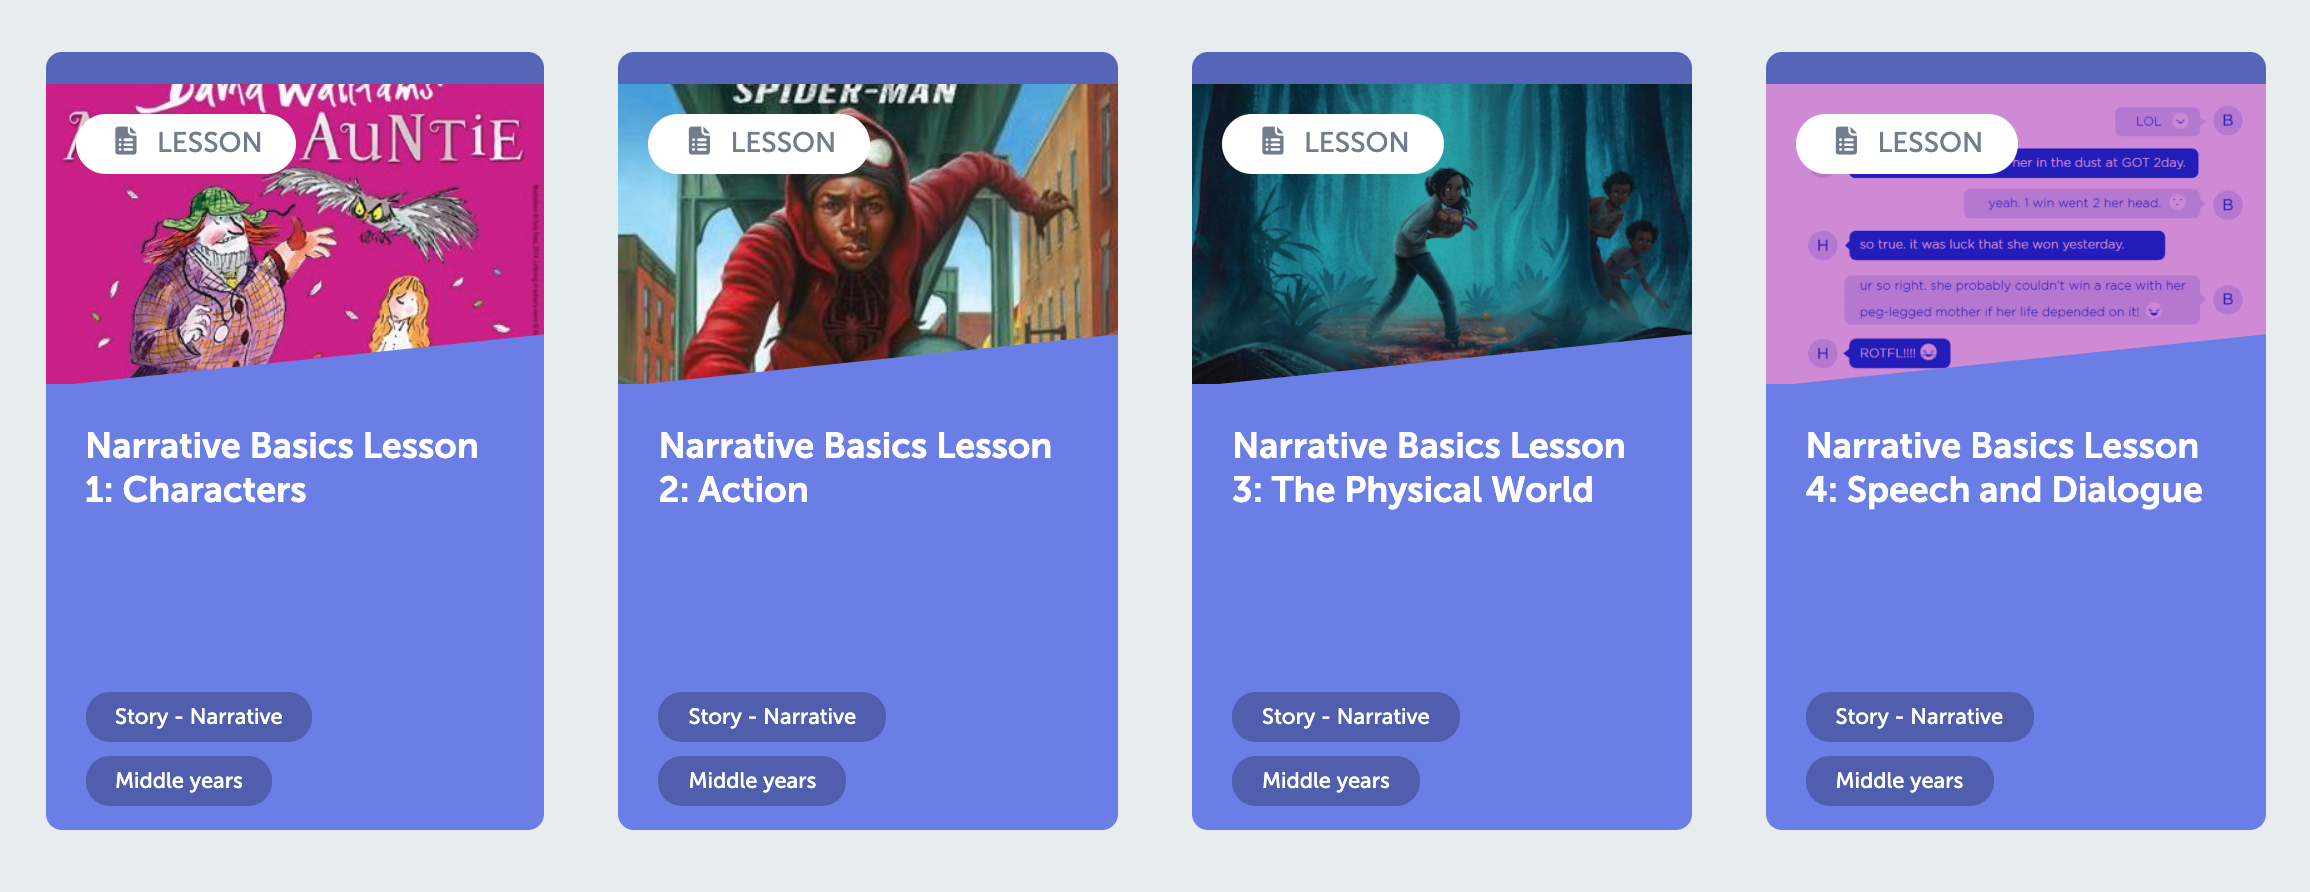 Narrative basics overview lessons